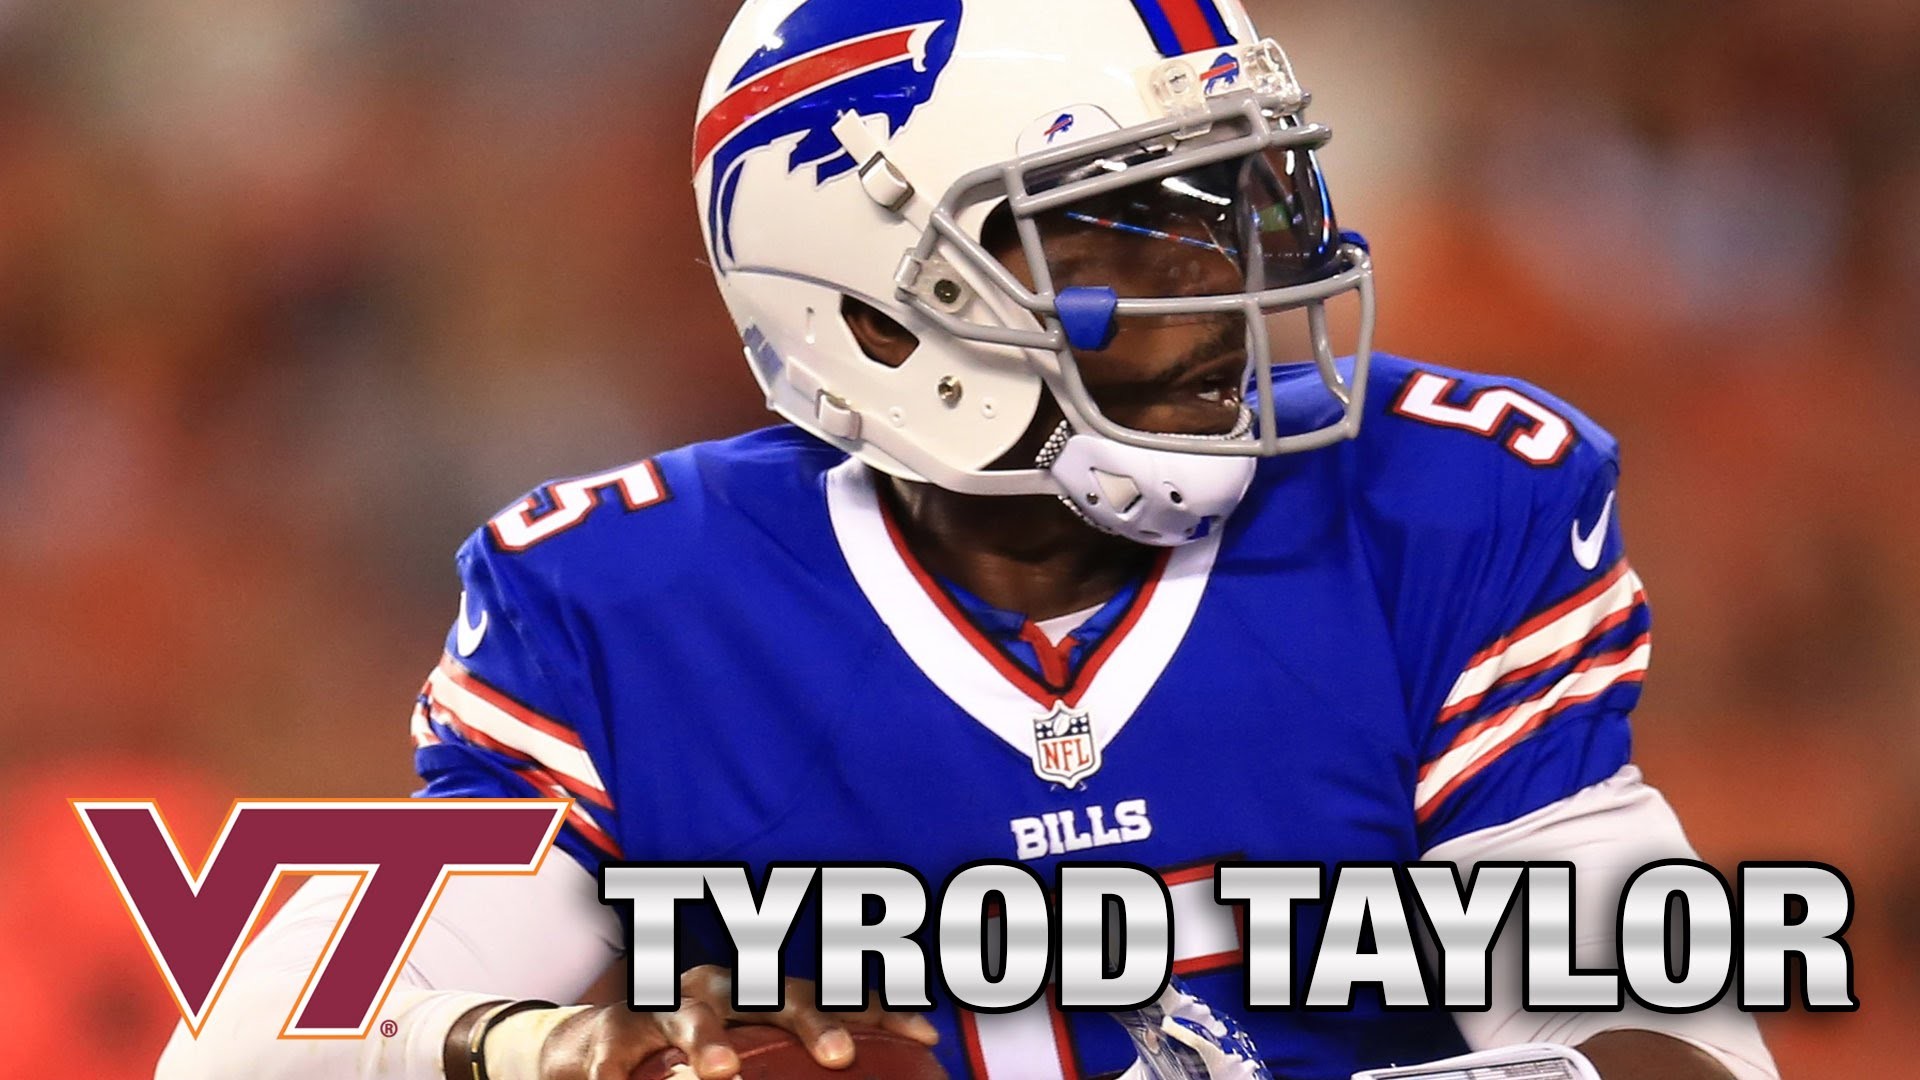 1920x1080 Bills Starting Quarterback Tyrod Taylor's Best Moments at Virginia Tech -  YouTube